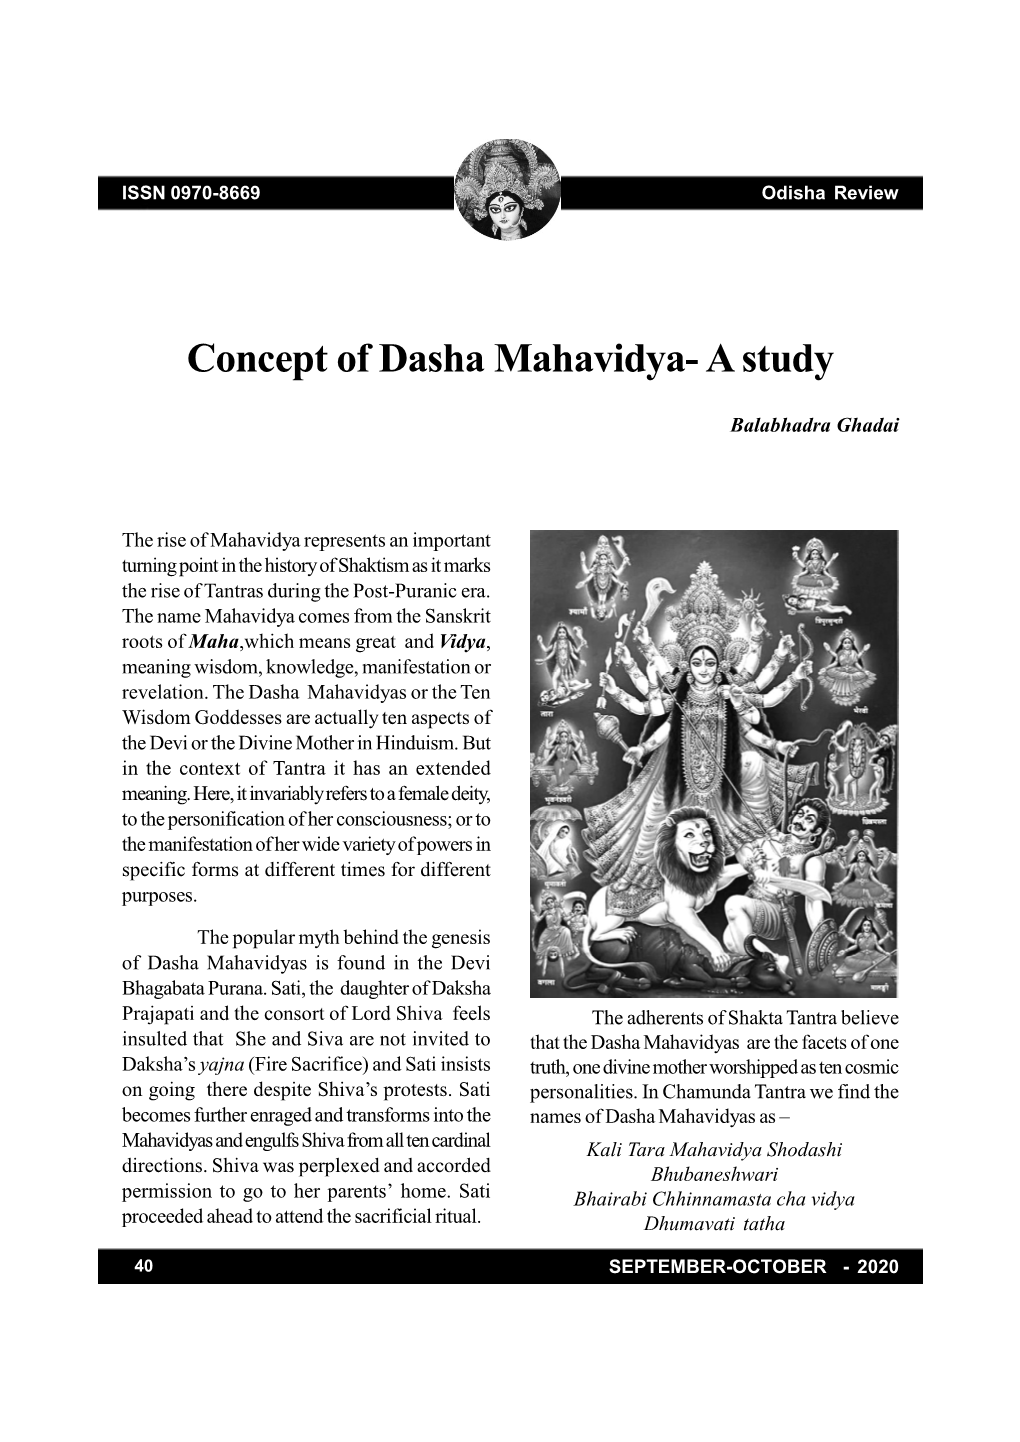 Concept of Dasha Mahavidya- a Study